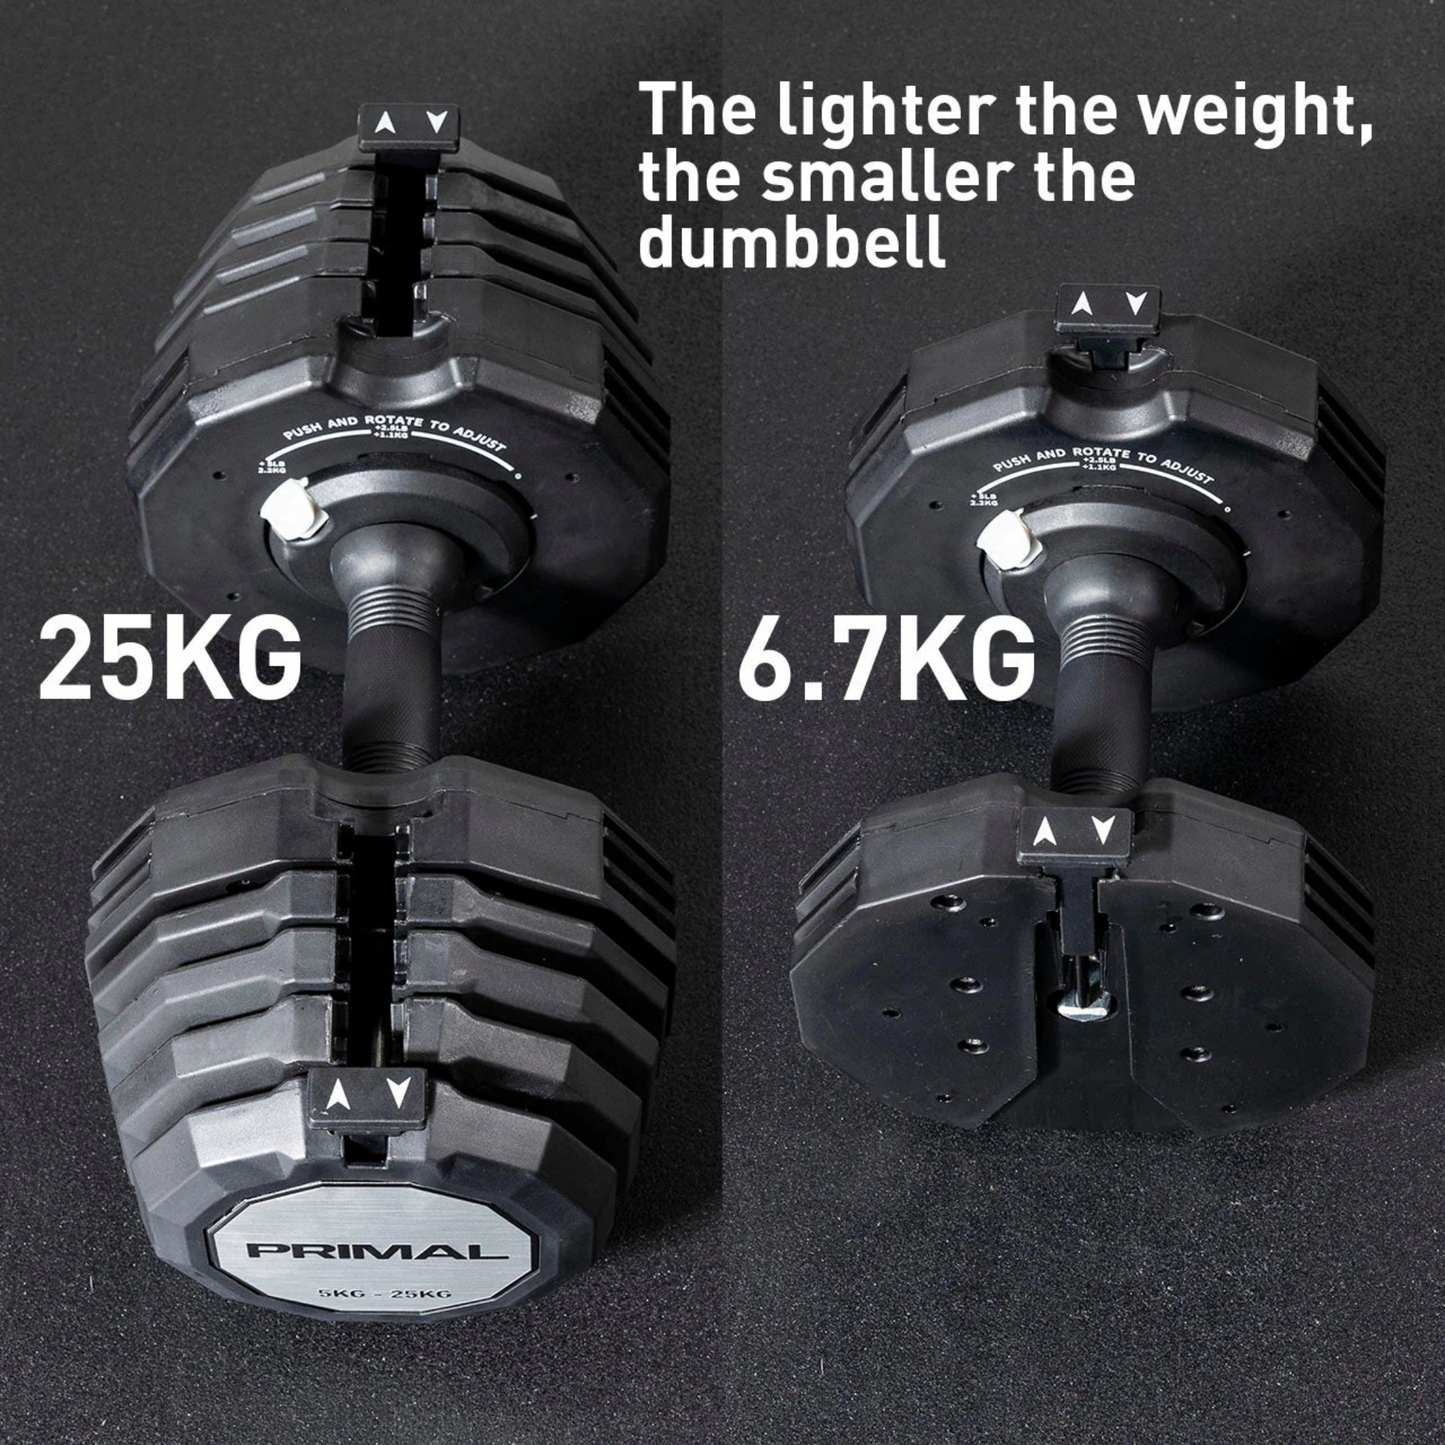 Primal Personal Series Adjustable Dumbbell - 25kg/55lb (SINGLE)